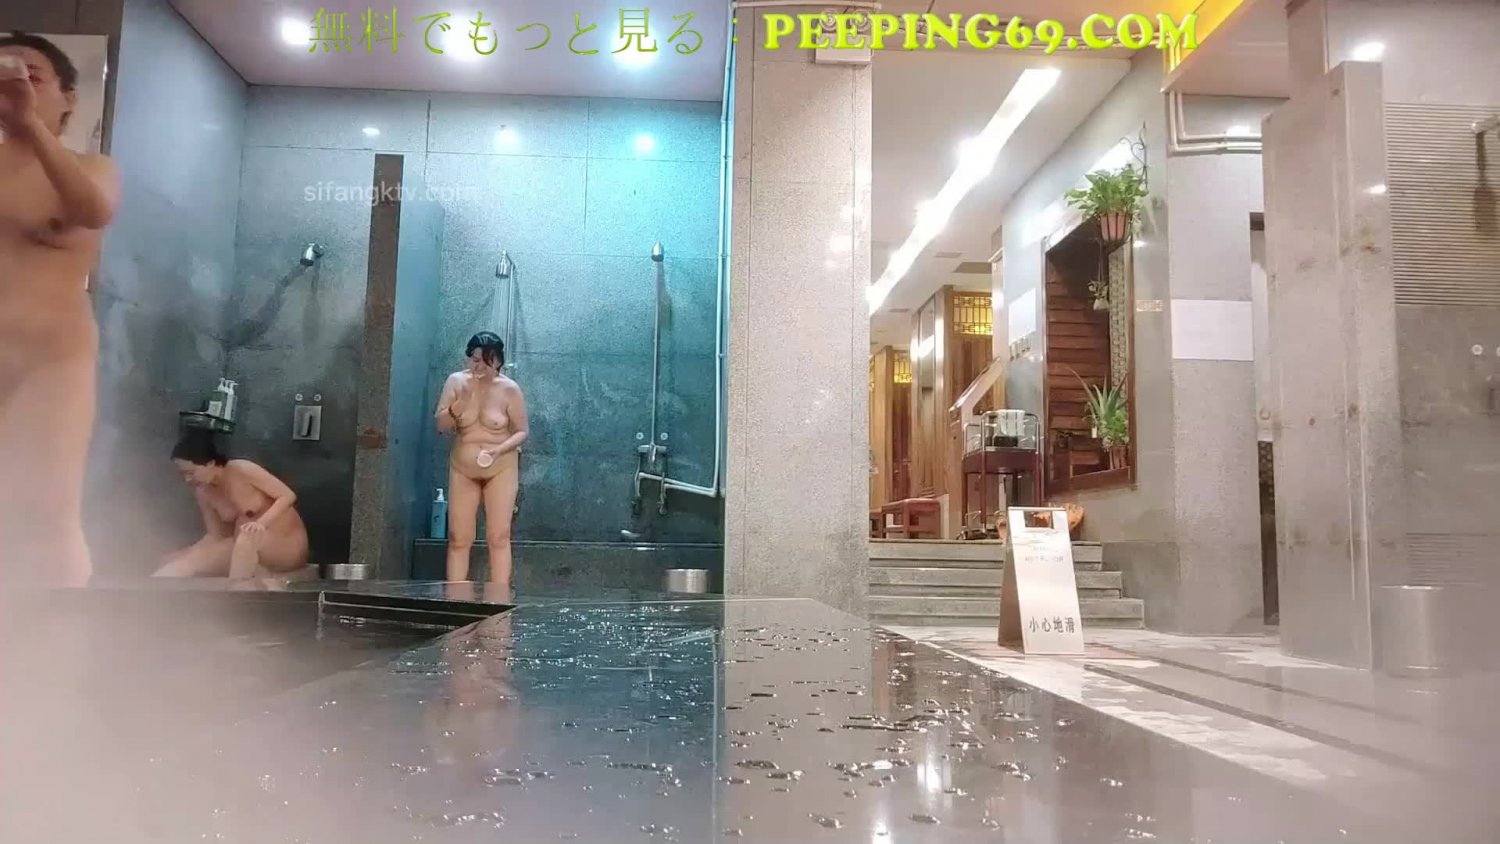 china peeping bathroom voyeur videos leaked - Porn pic